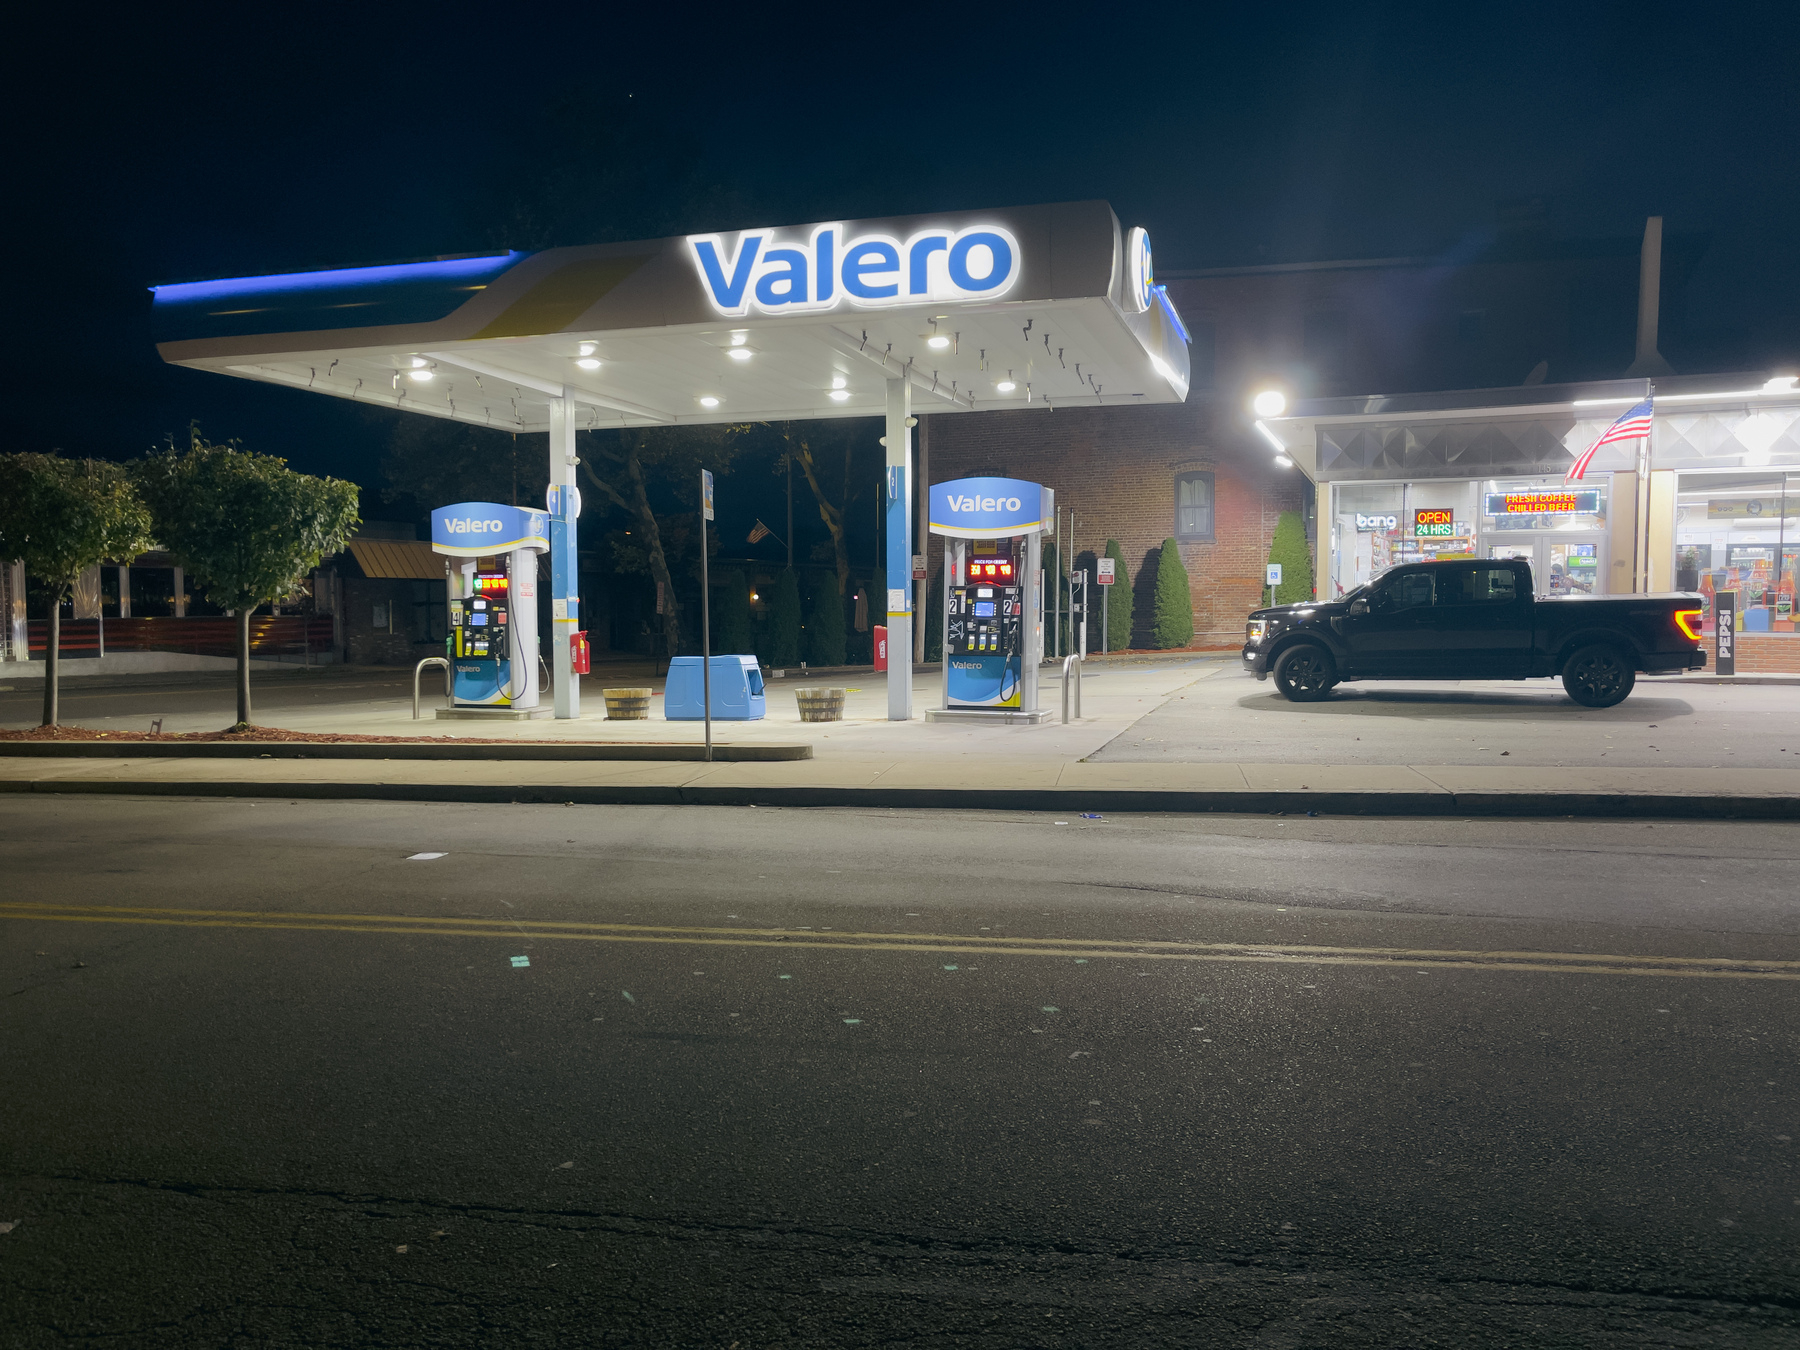 Valero gas station across the street at night.